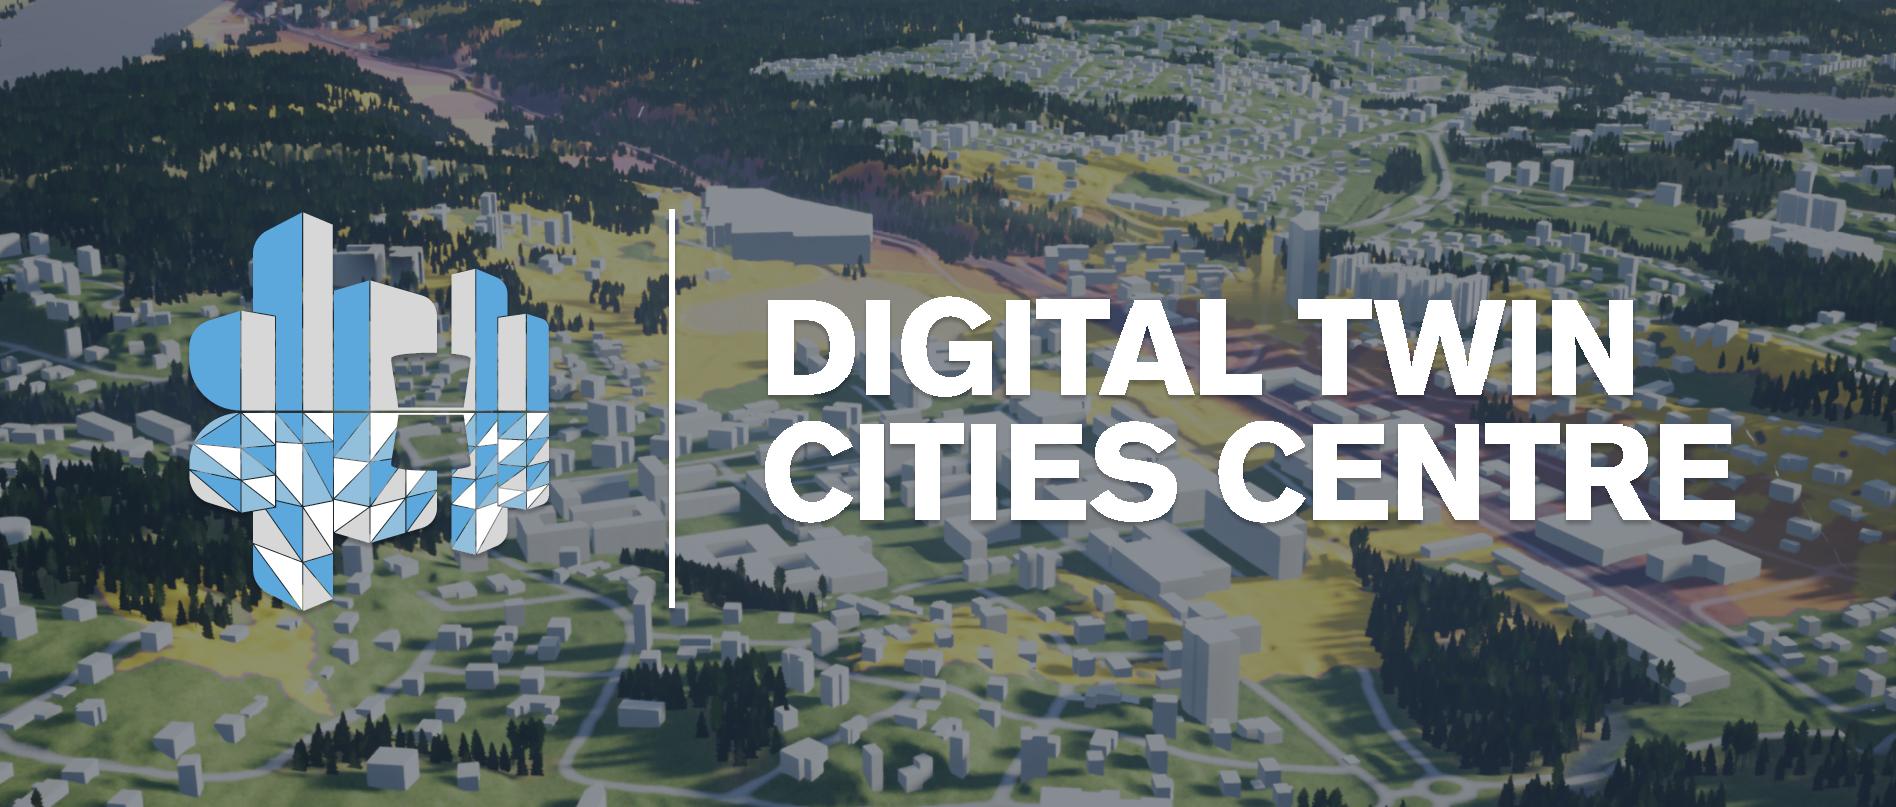 Digital Twin Cities Centre